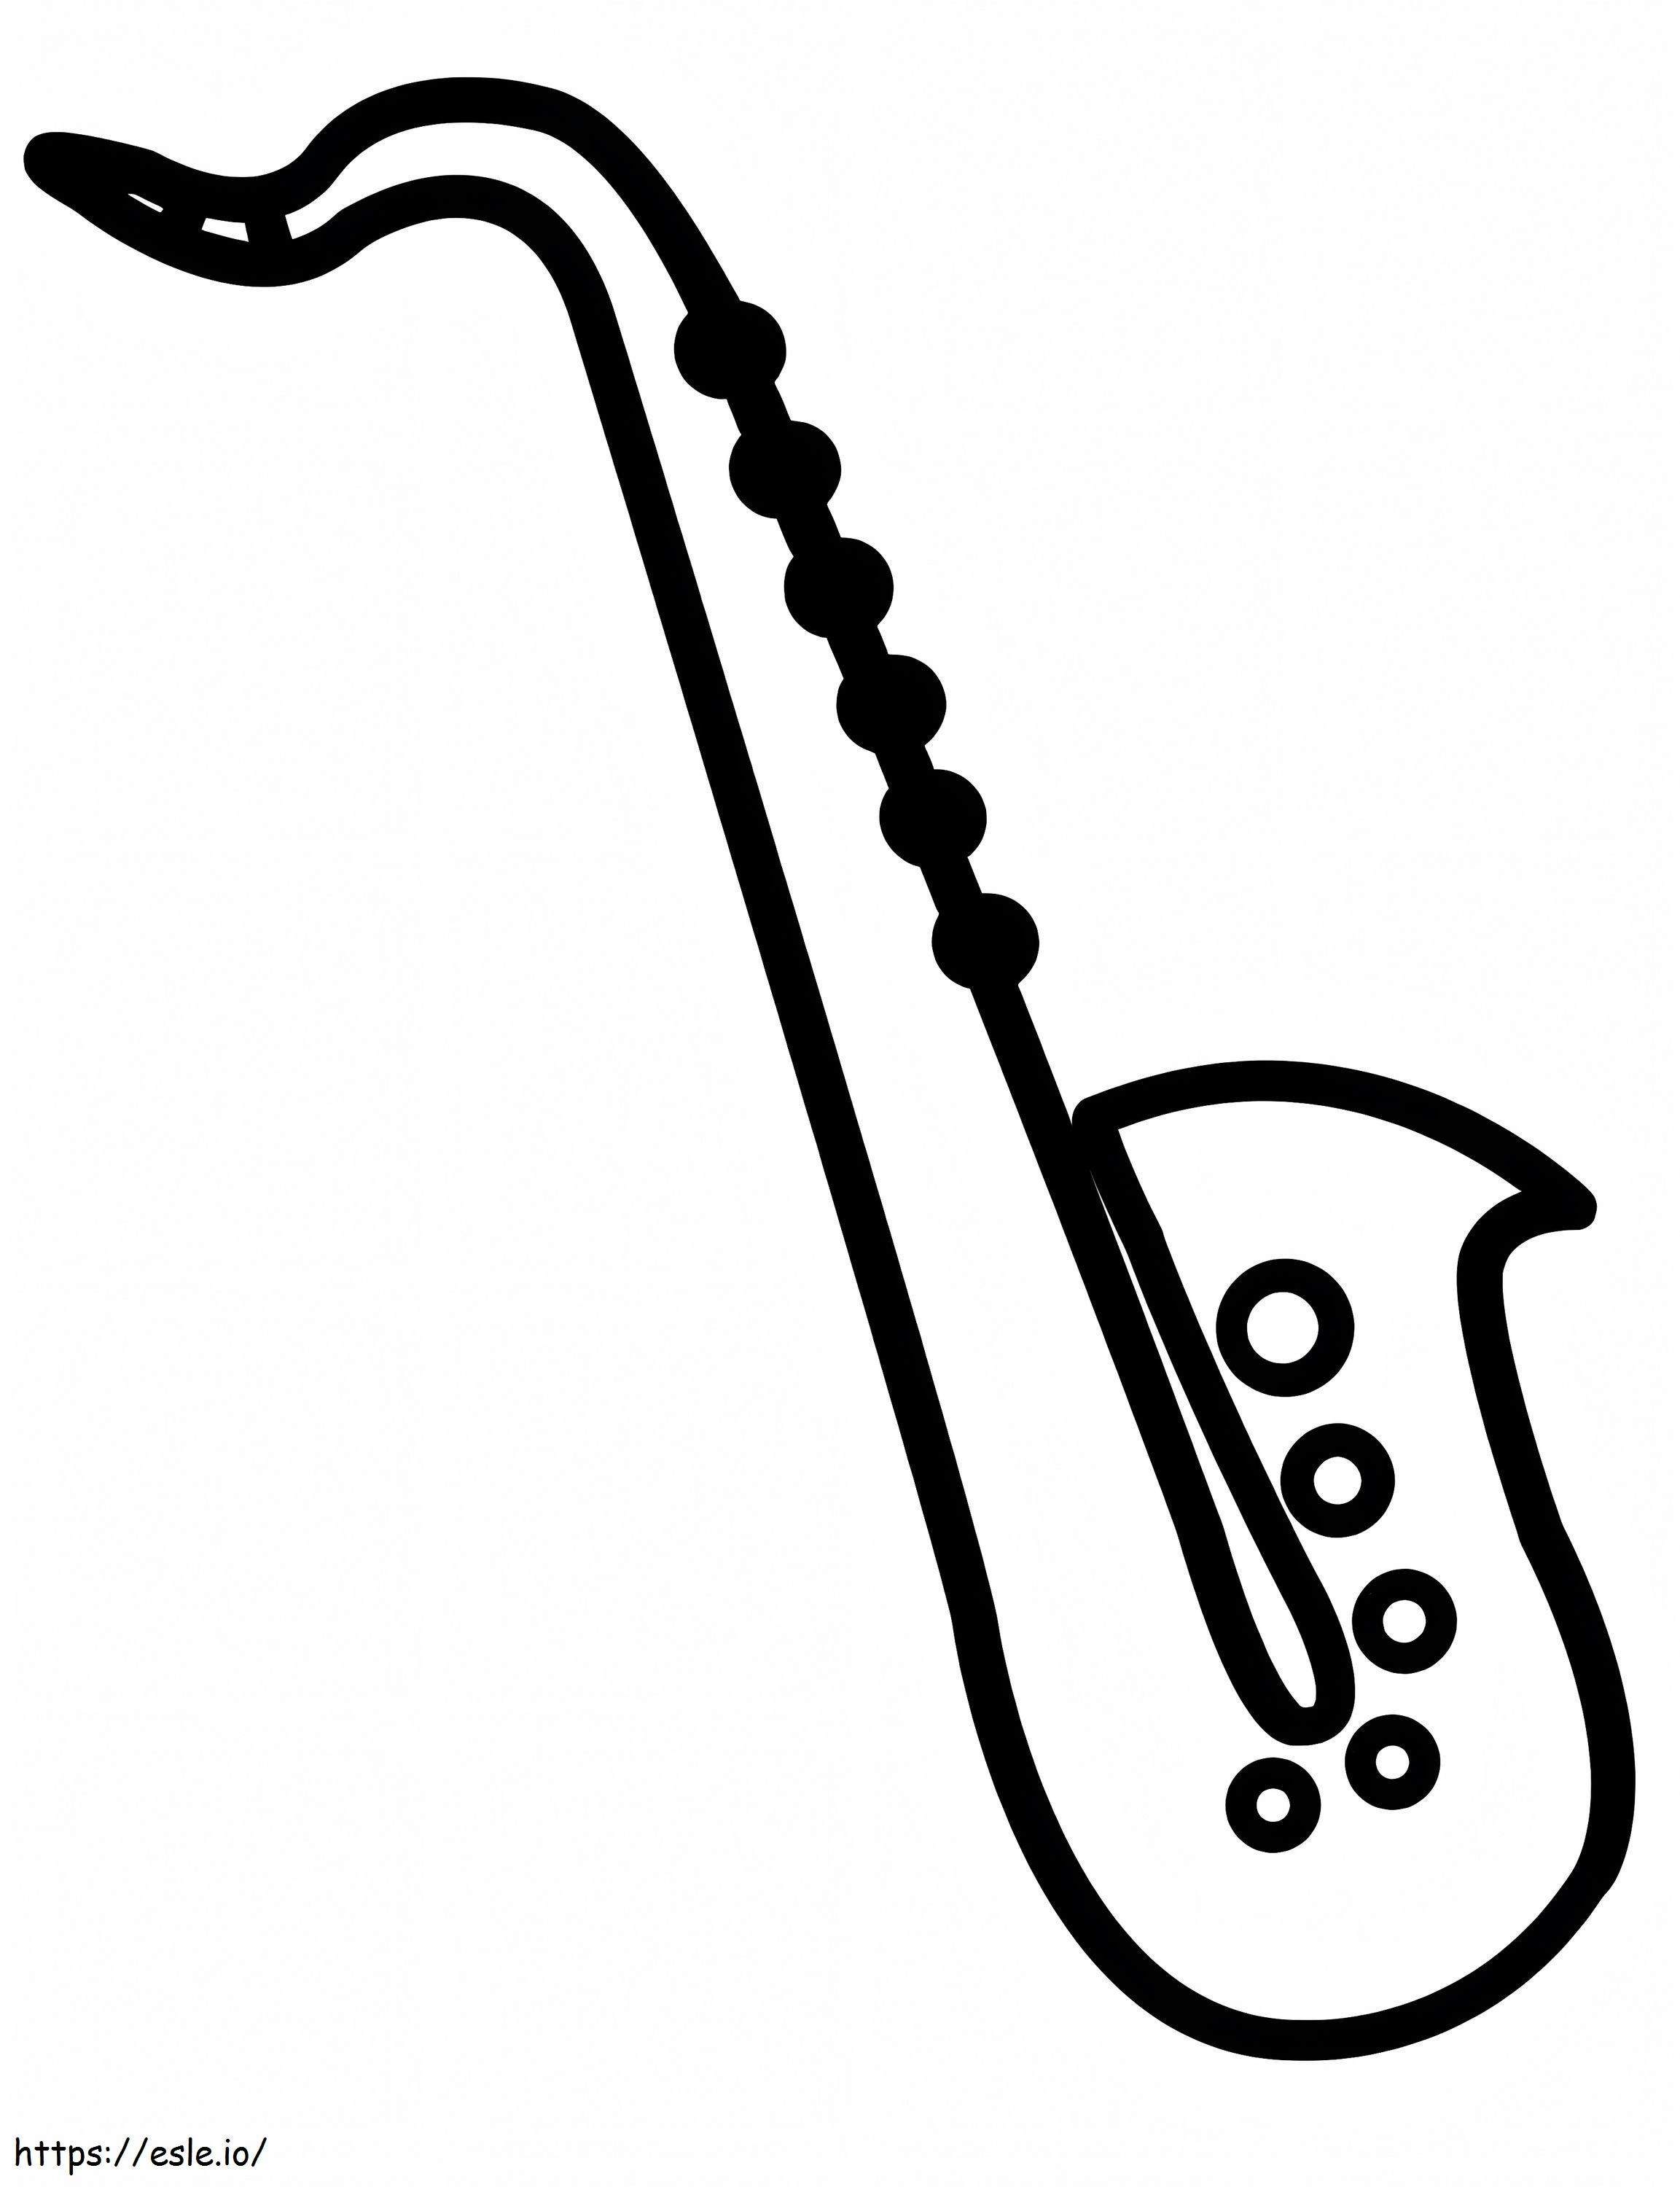 Saxofone Simples 3 para colorir